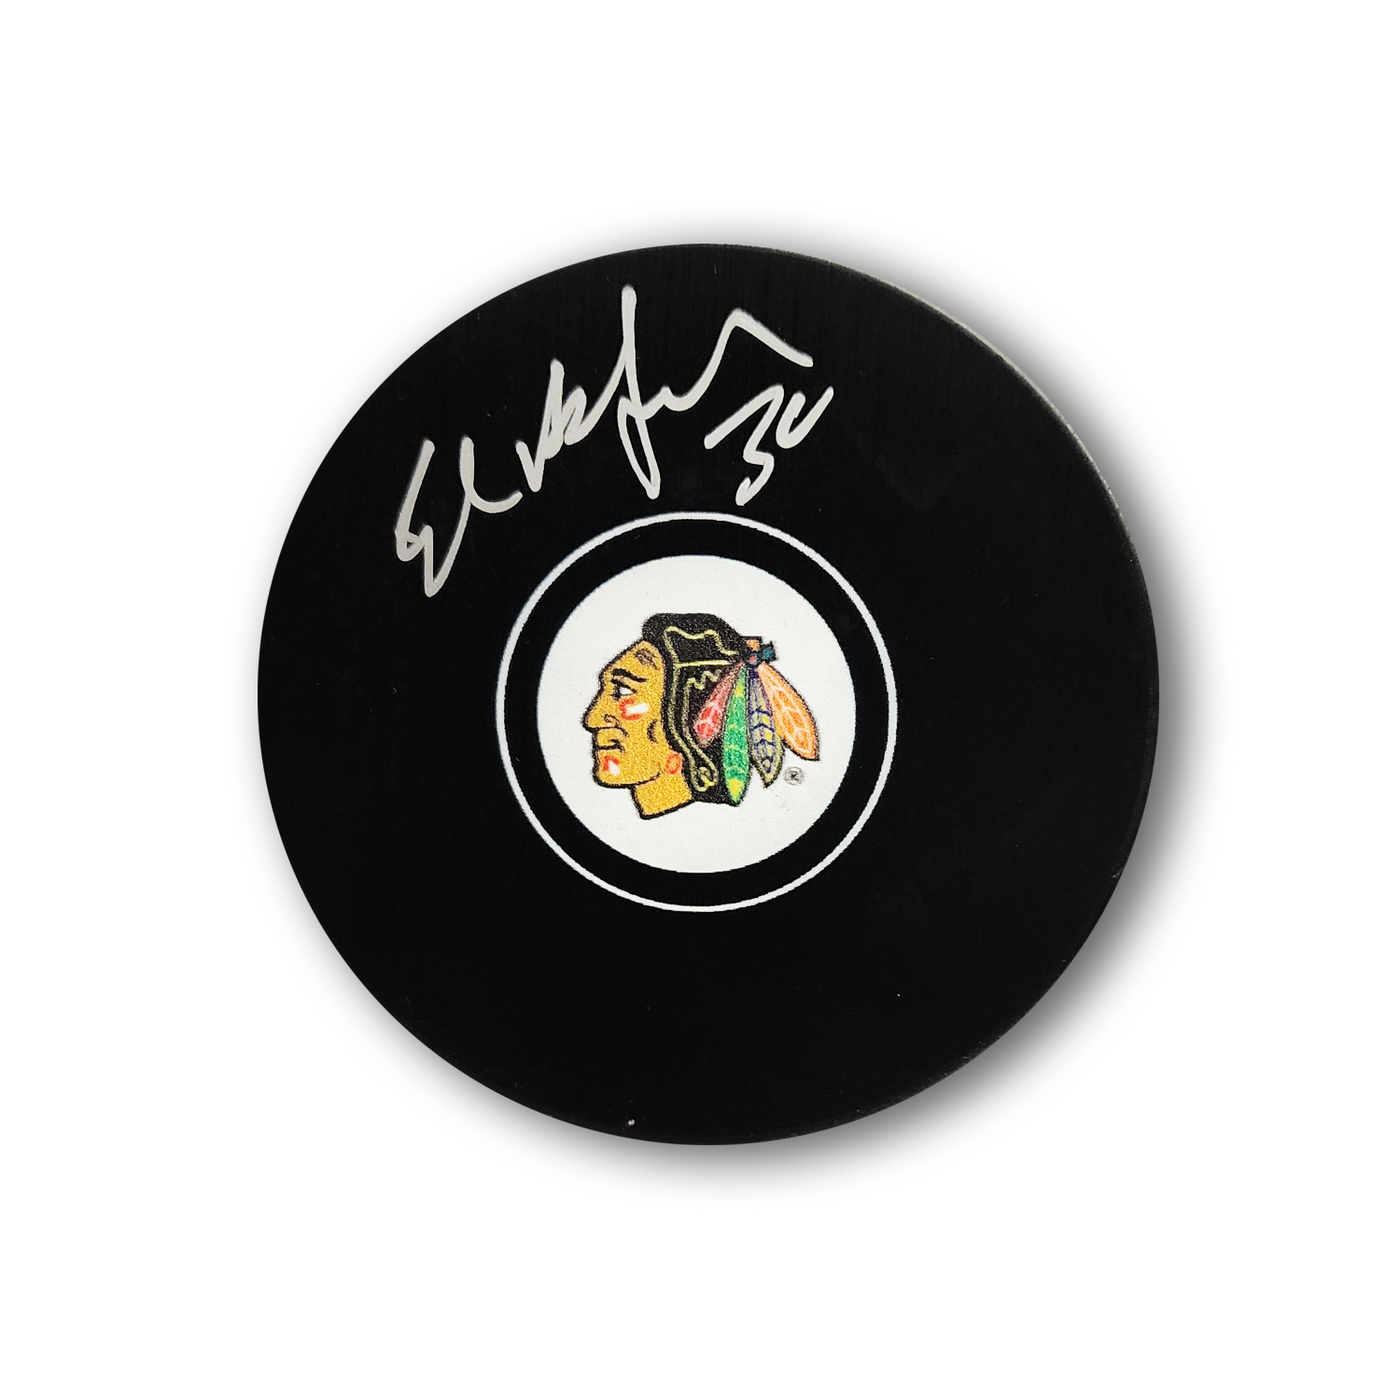 Ed Belfour Autographed Chicago Black Hawks Hockey Puck